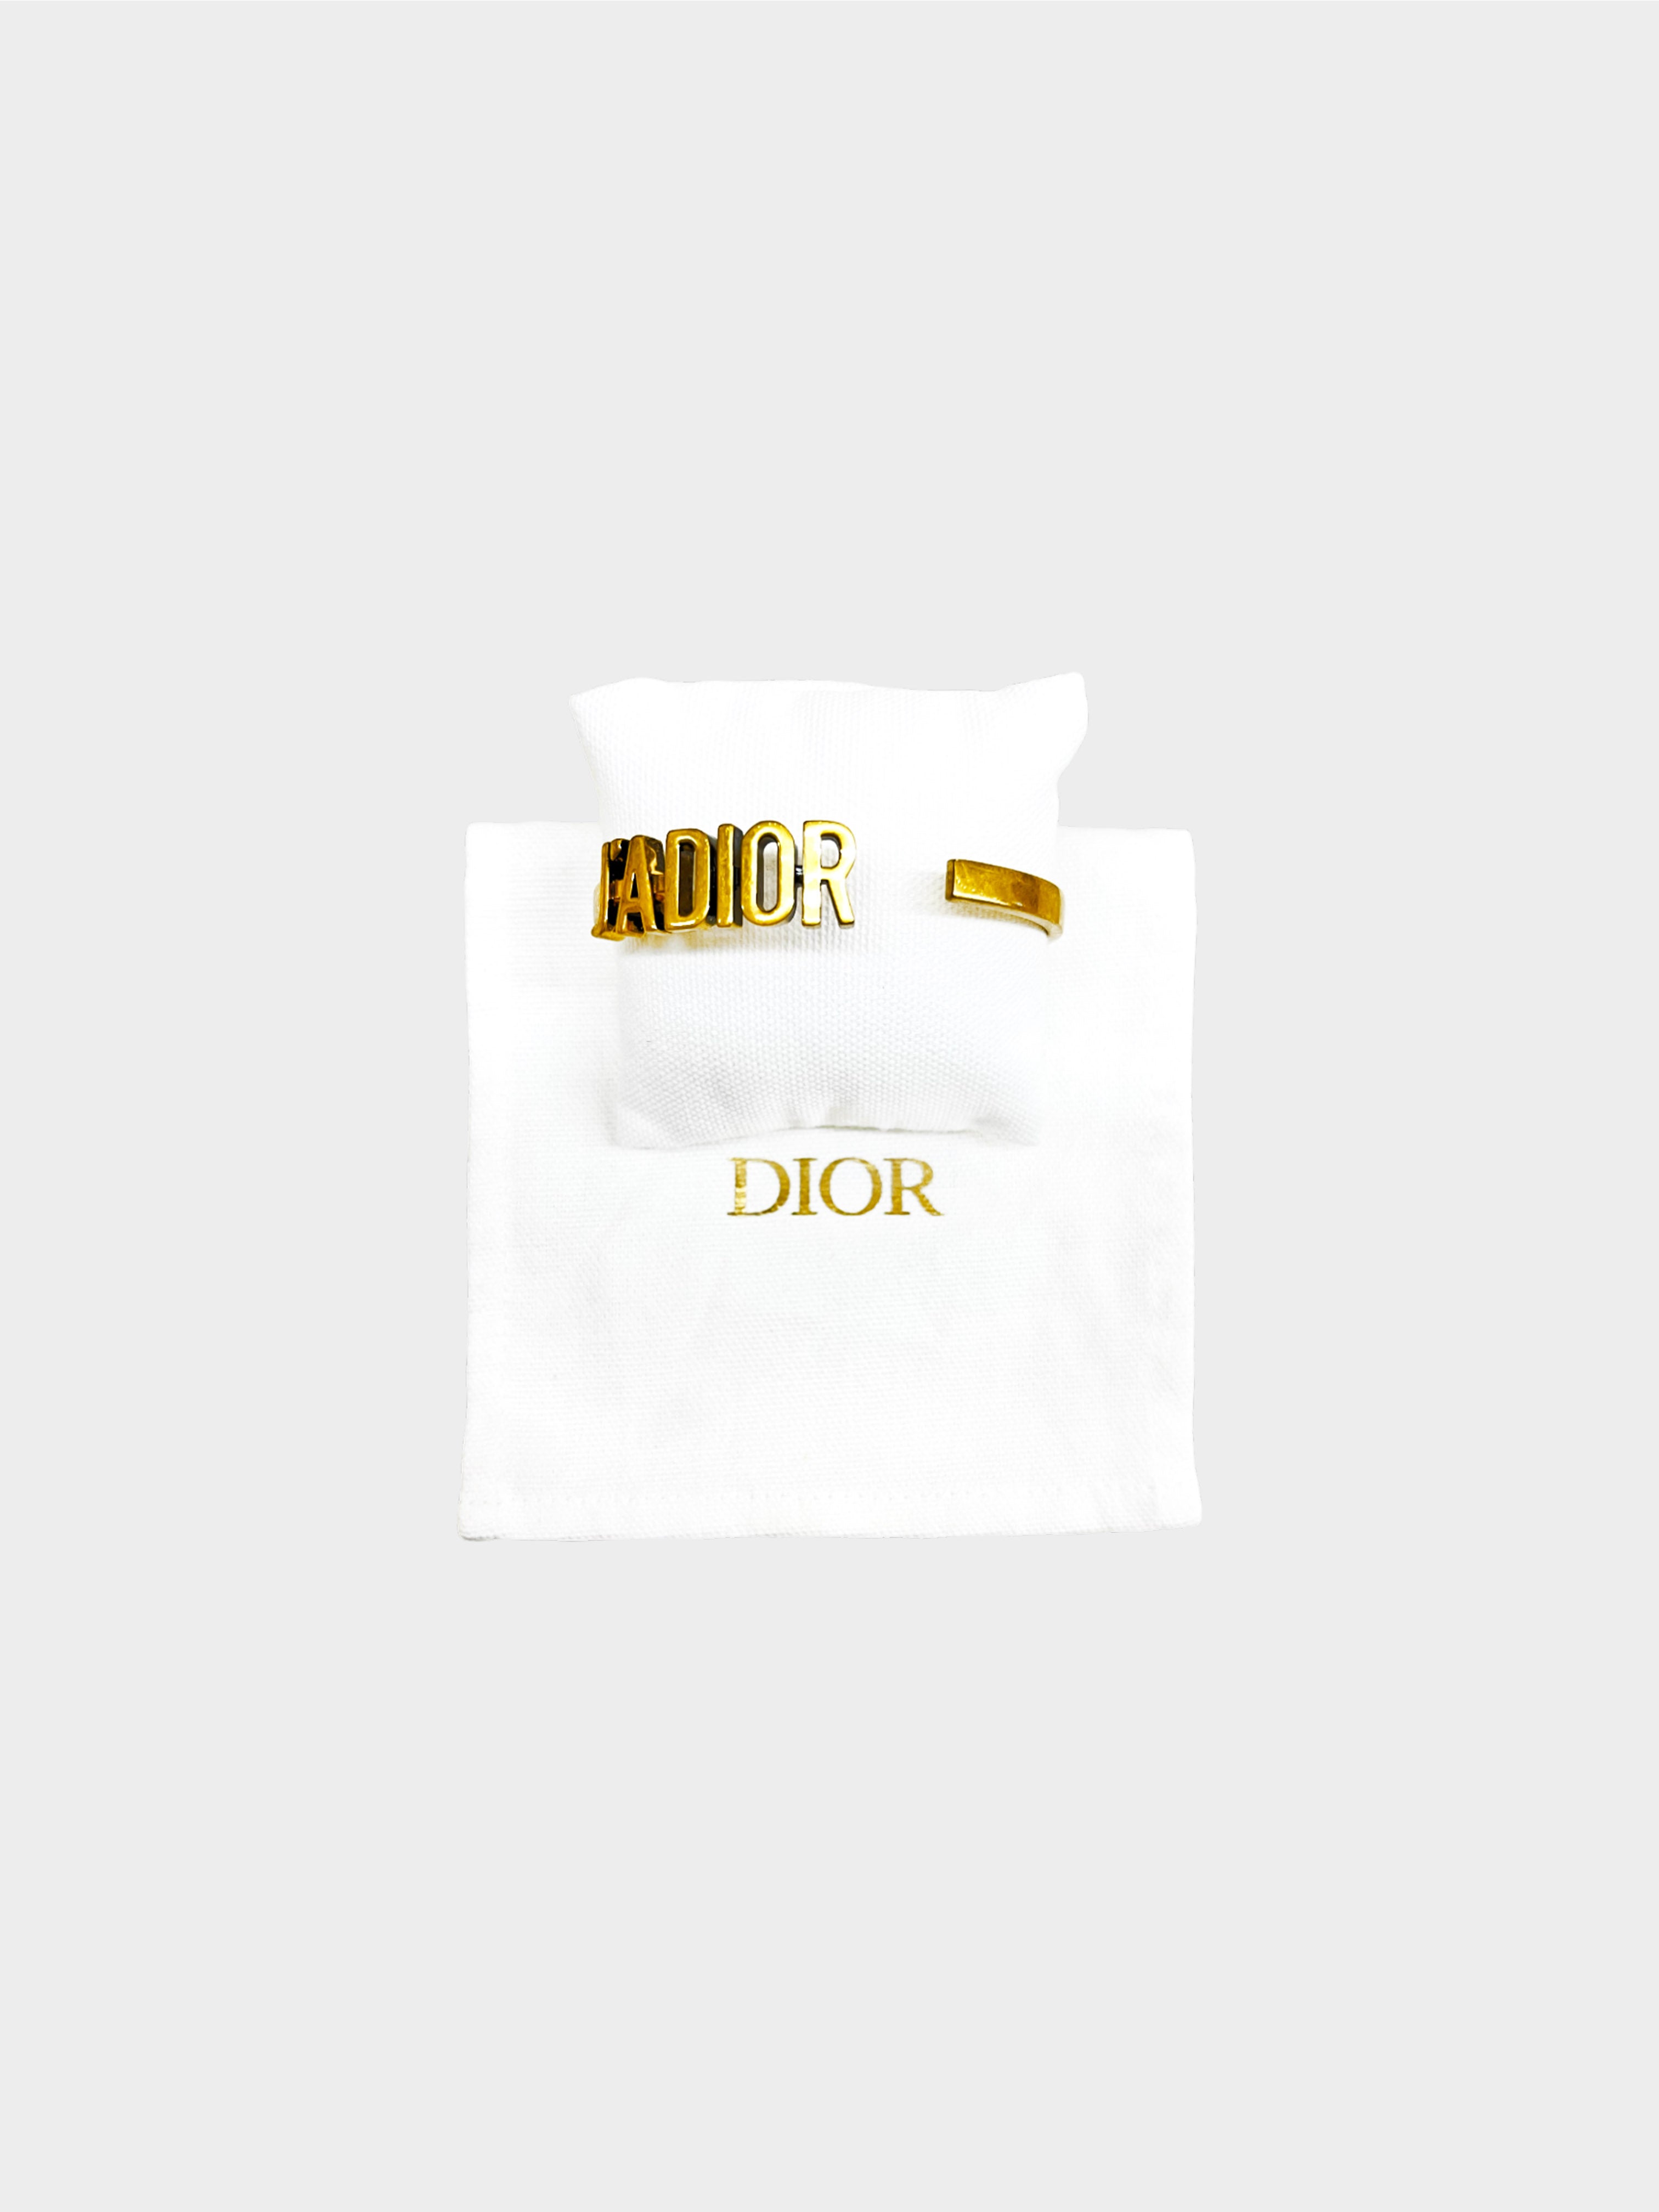 Christian Dior 2010s Aged Gold J’Adior Cuff Bracelet